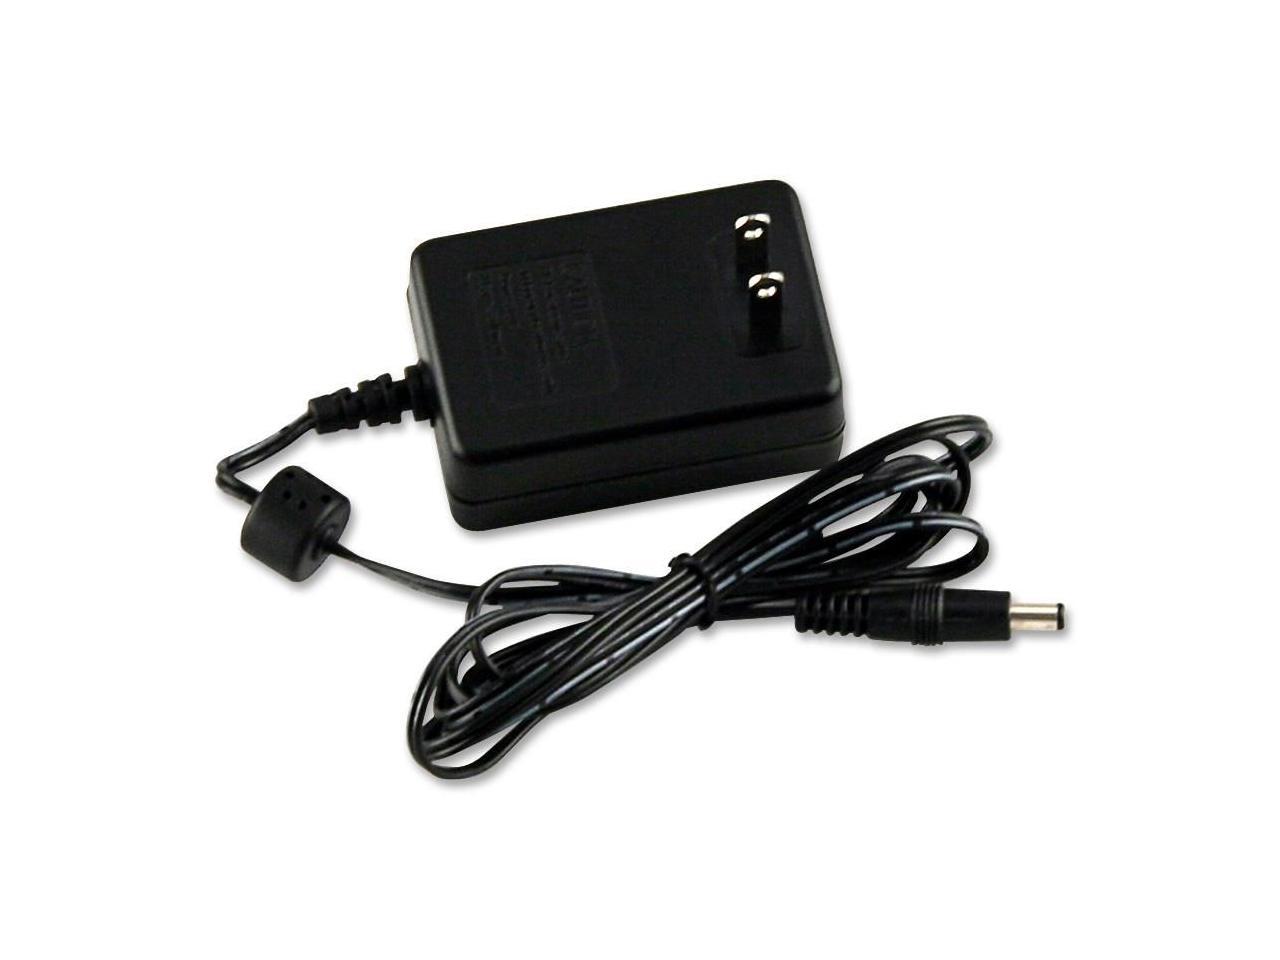 Kyocera AD24 Power Adapter